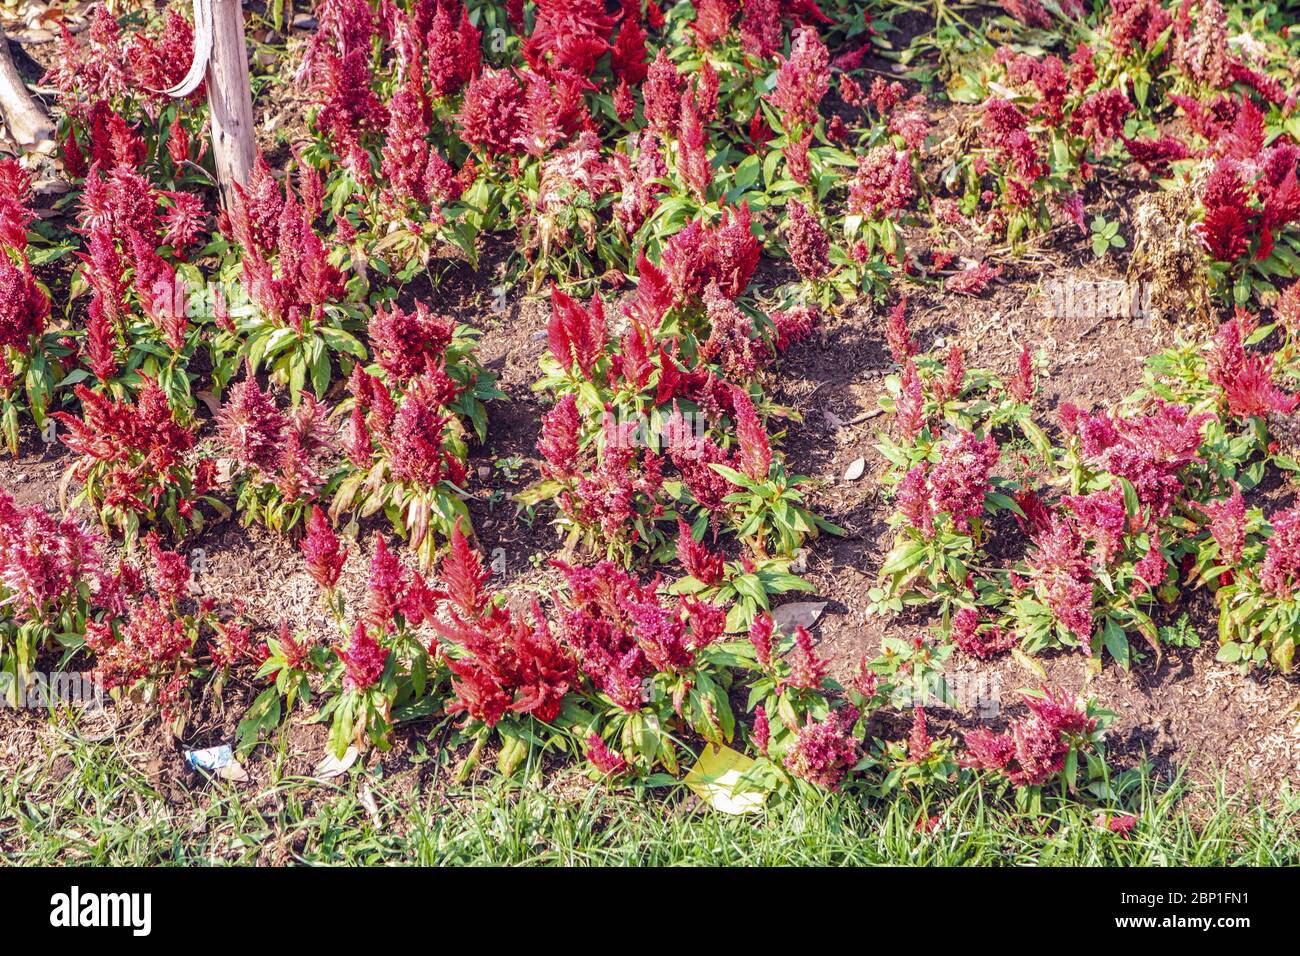 Celosia flowers in a garden Stock Photo